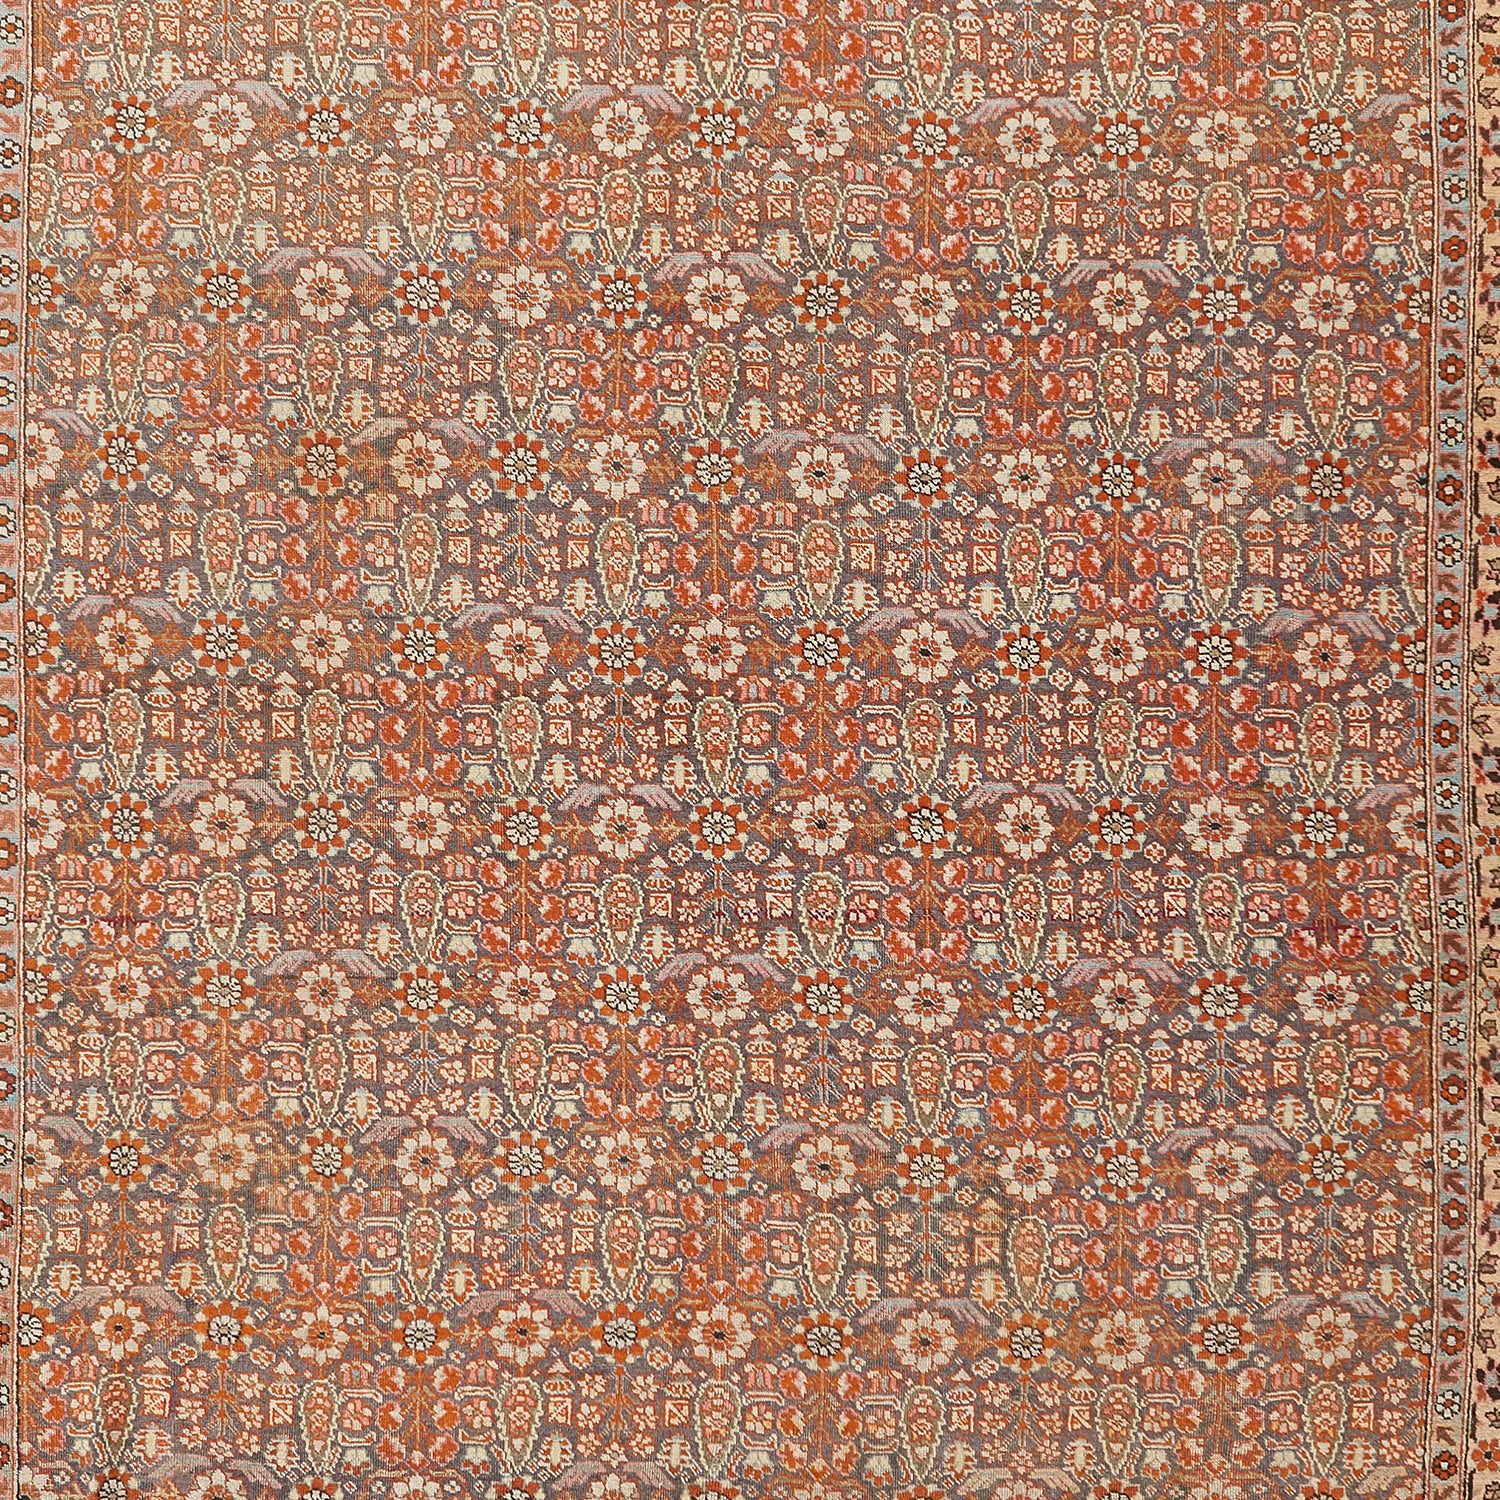 Exquisite traditional carpet showcases intricate design, warm tones, and fine craftsmanship.